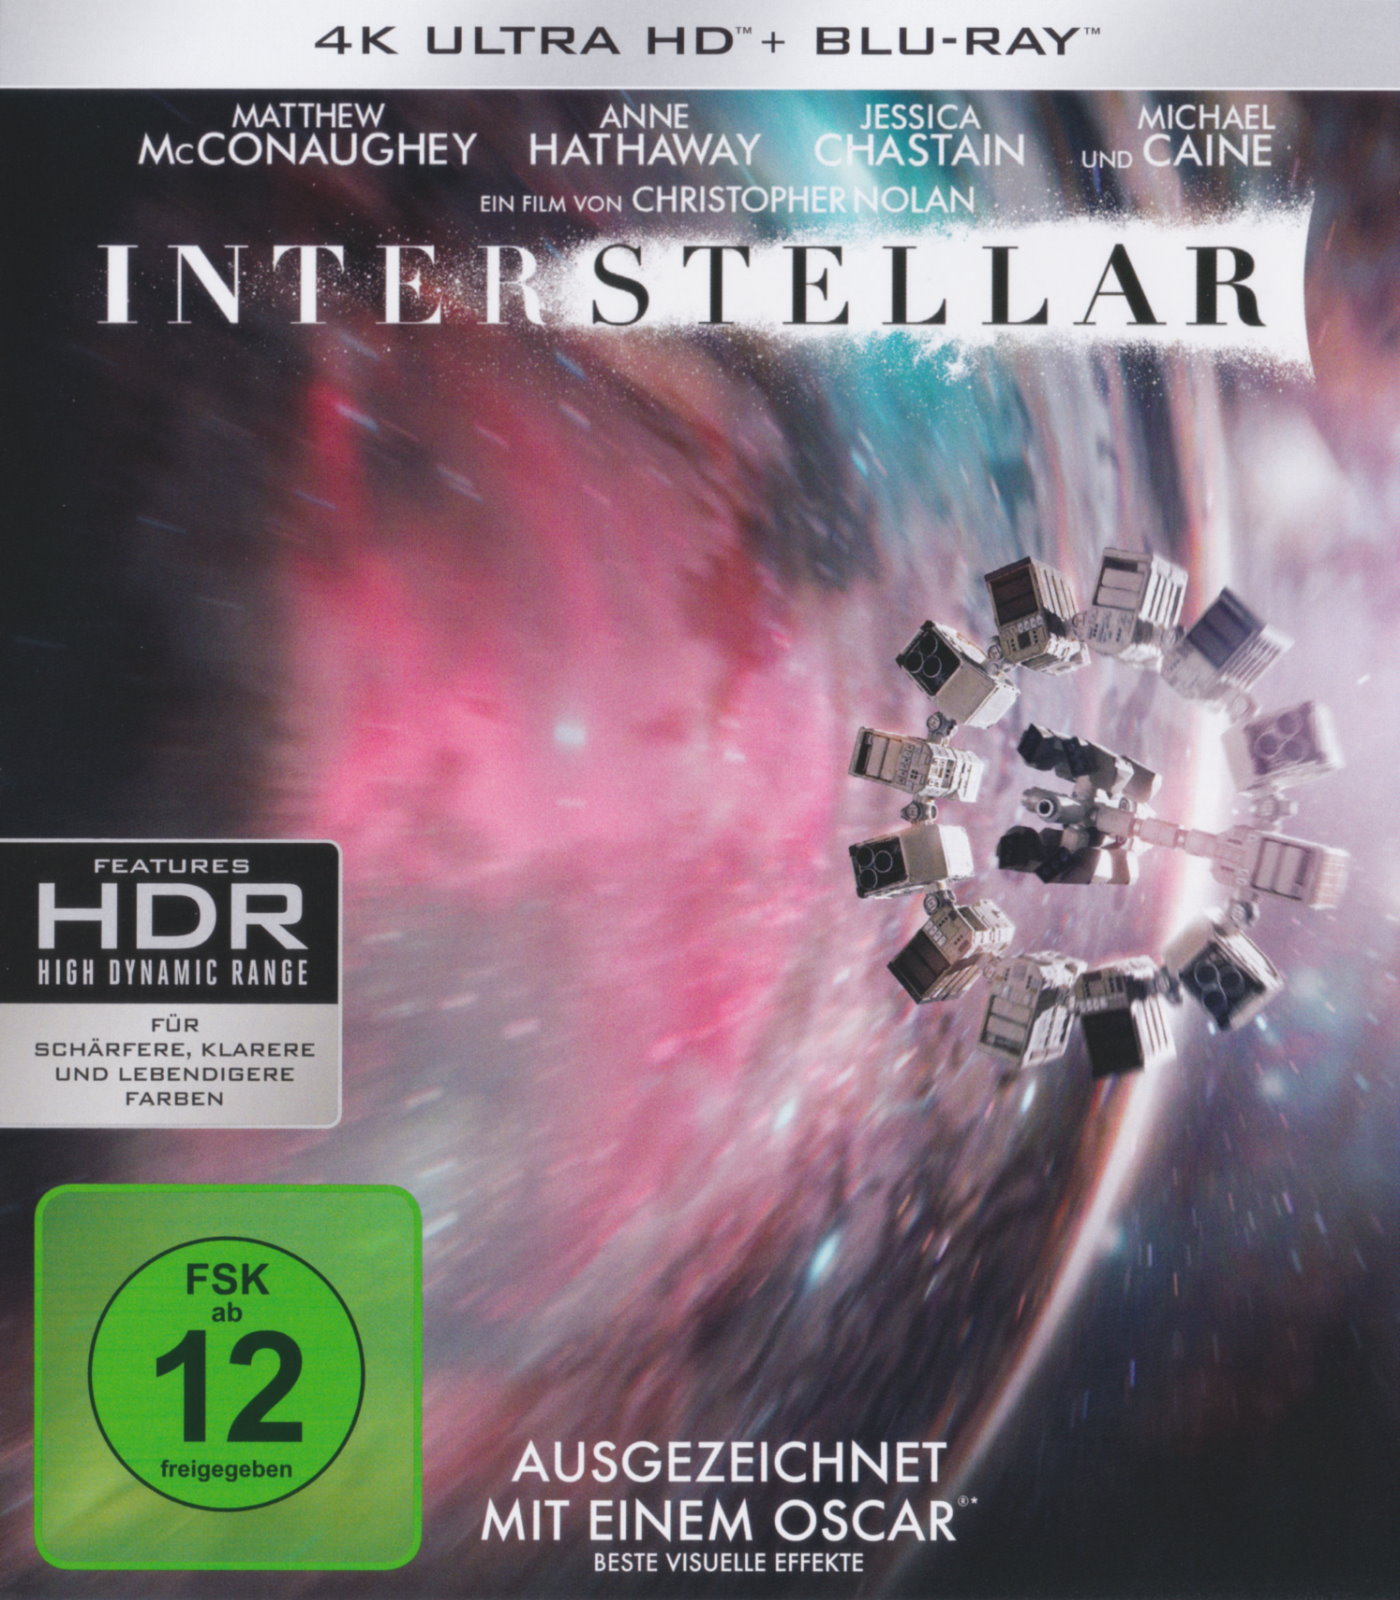 Cover - Interstellar.jpg